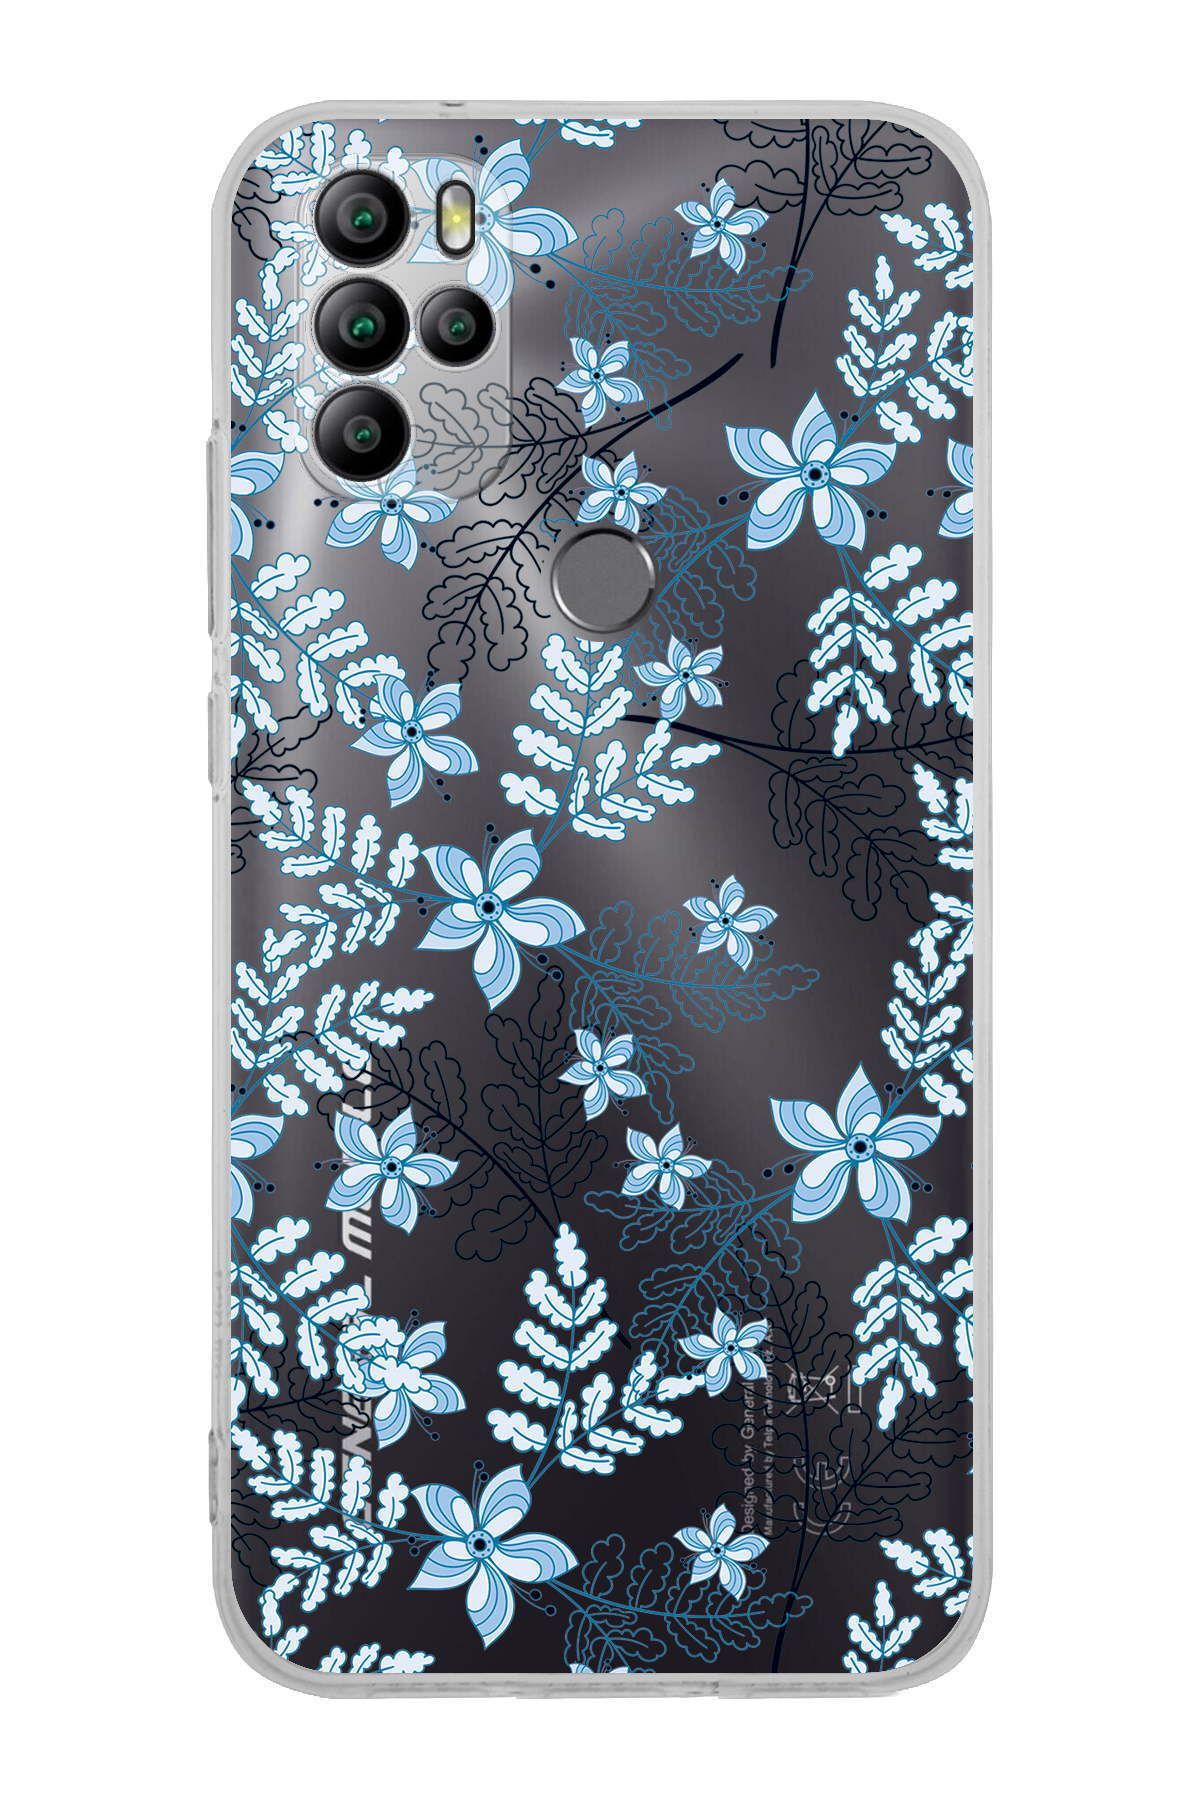 PrintiFy General Mobile GM 21 Pro New Edition Uyumlu Kamera Korumalı Floral Mavi Kılıf